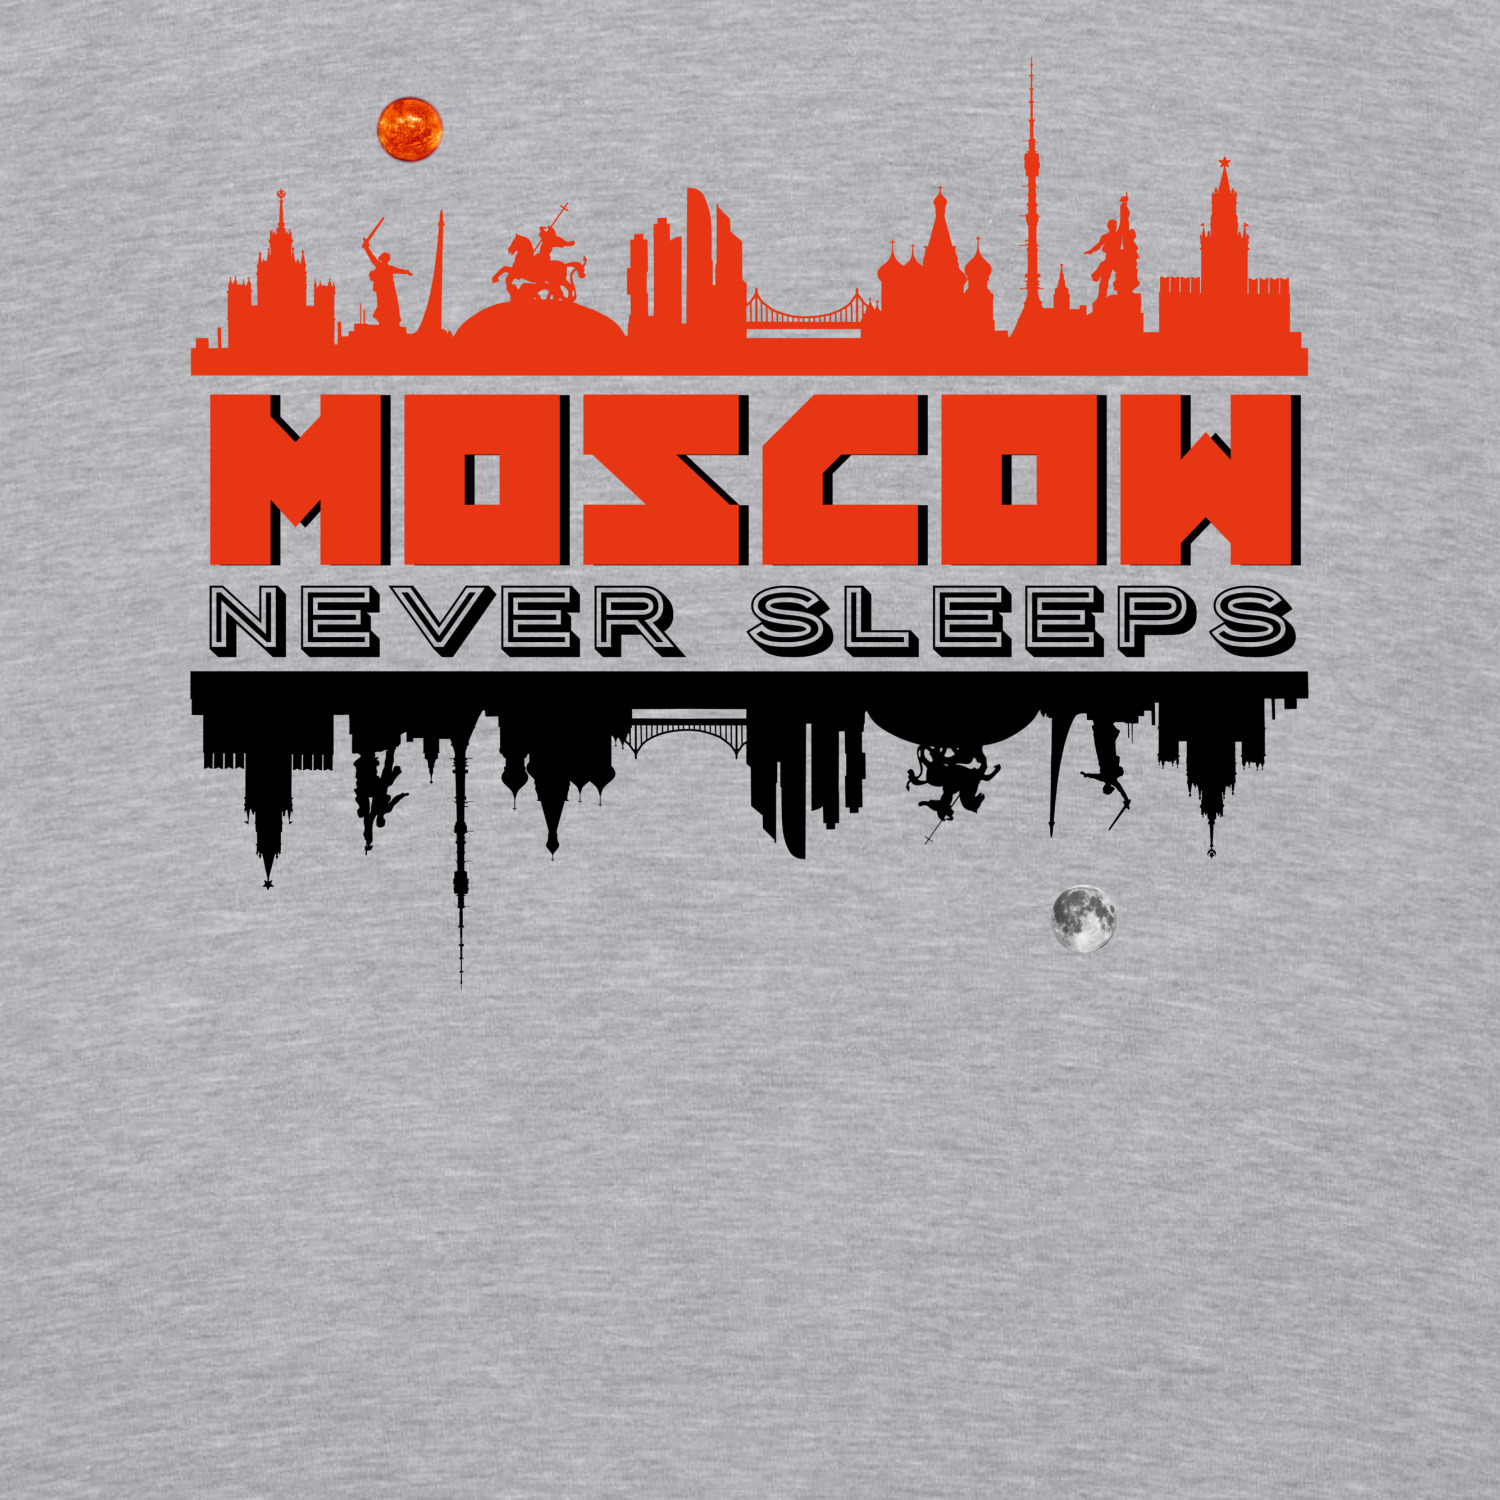 Москва невер слип